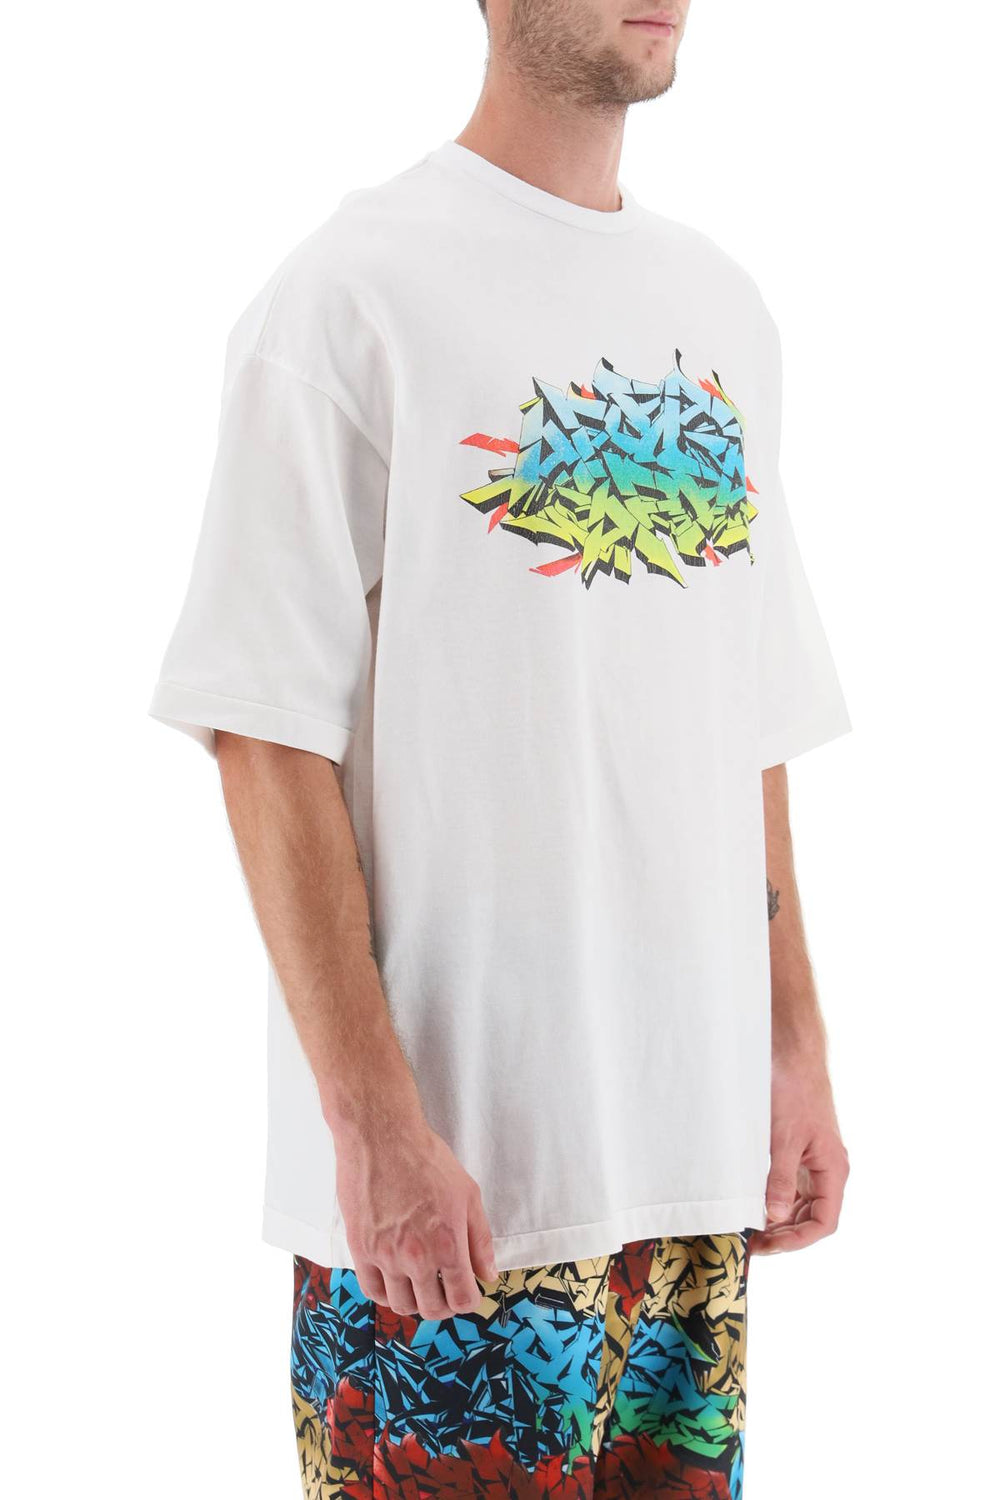 Children of the discordance graffiti print t-shirt-1